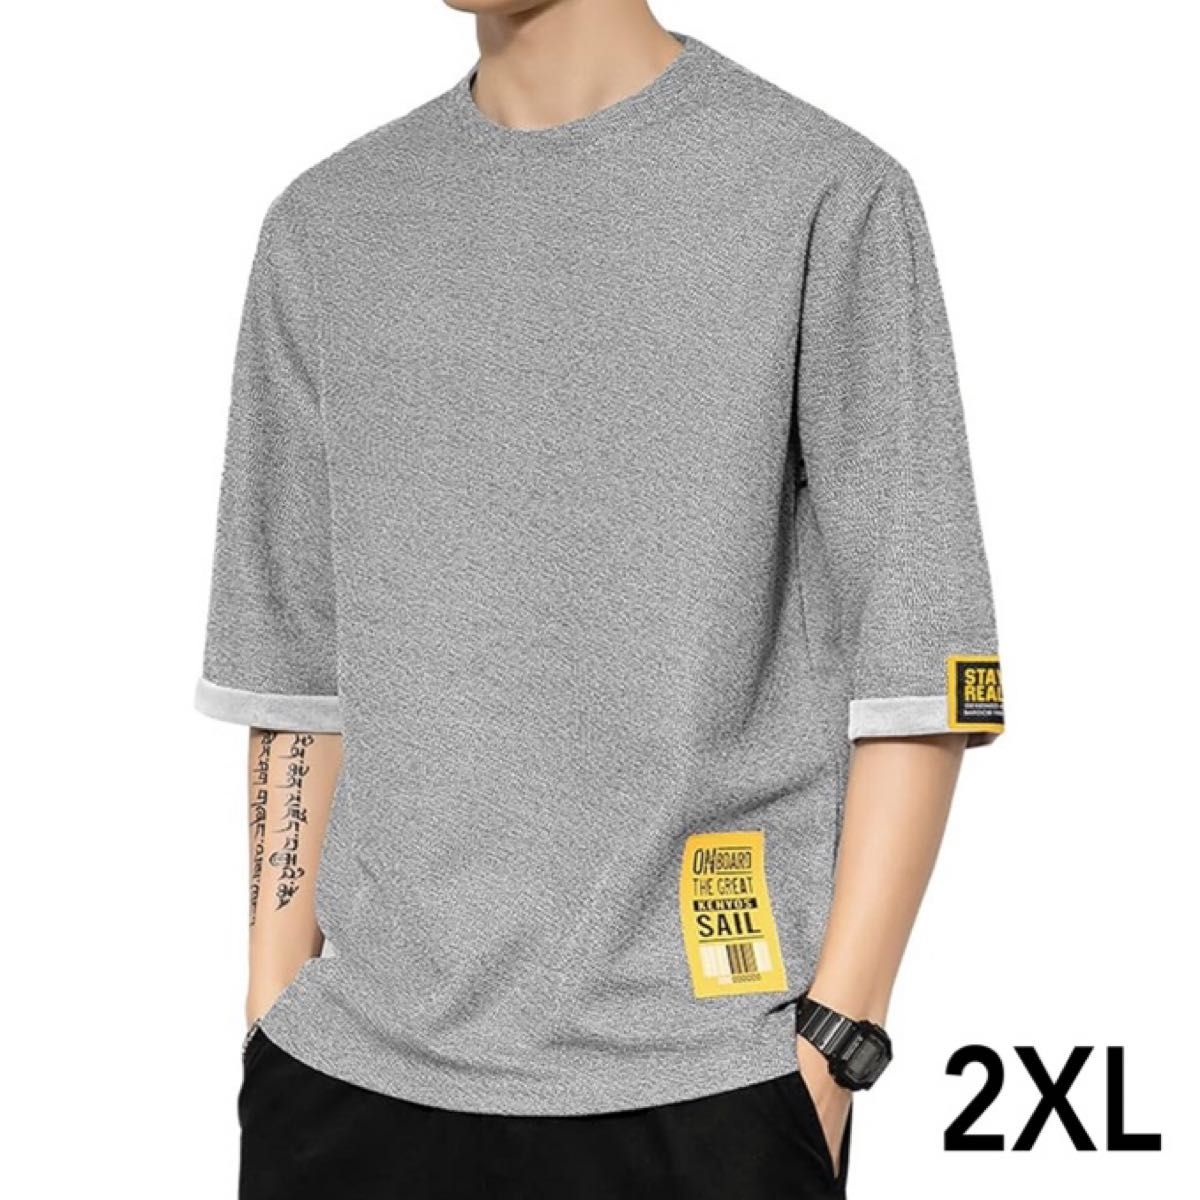 Tシャツ 2XL メンズ 半袖 夏服 ション カットソー カジュアル tシャツ ゆったり 丸襟 大きいサイズ 通気性 速乾 灰